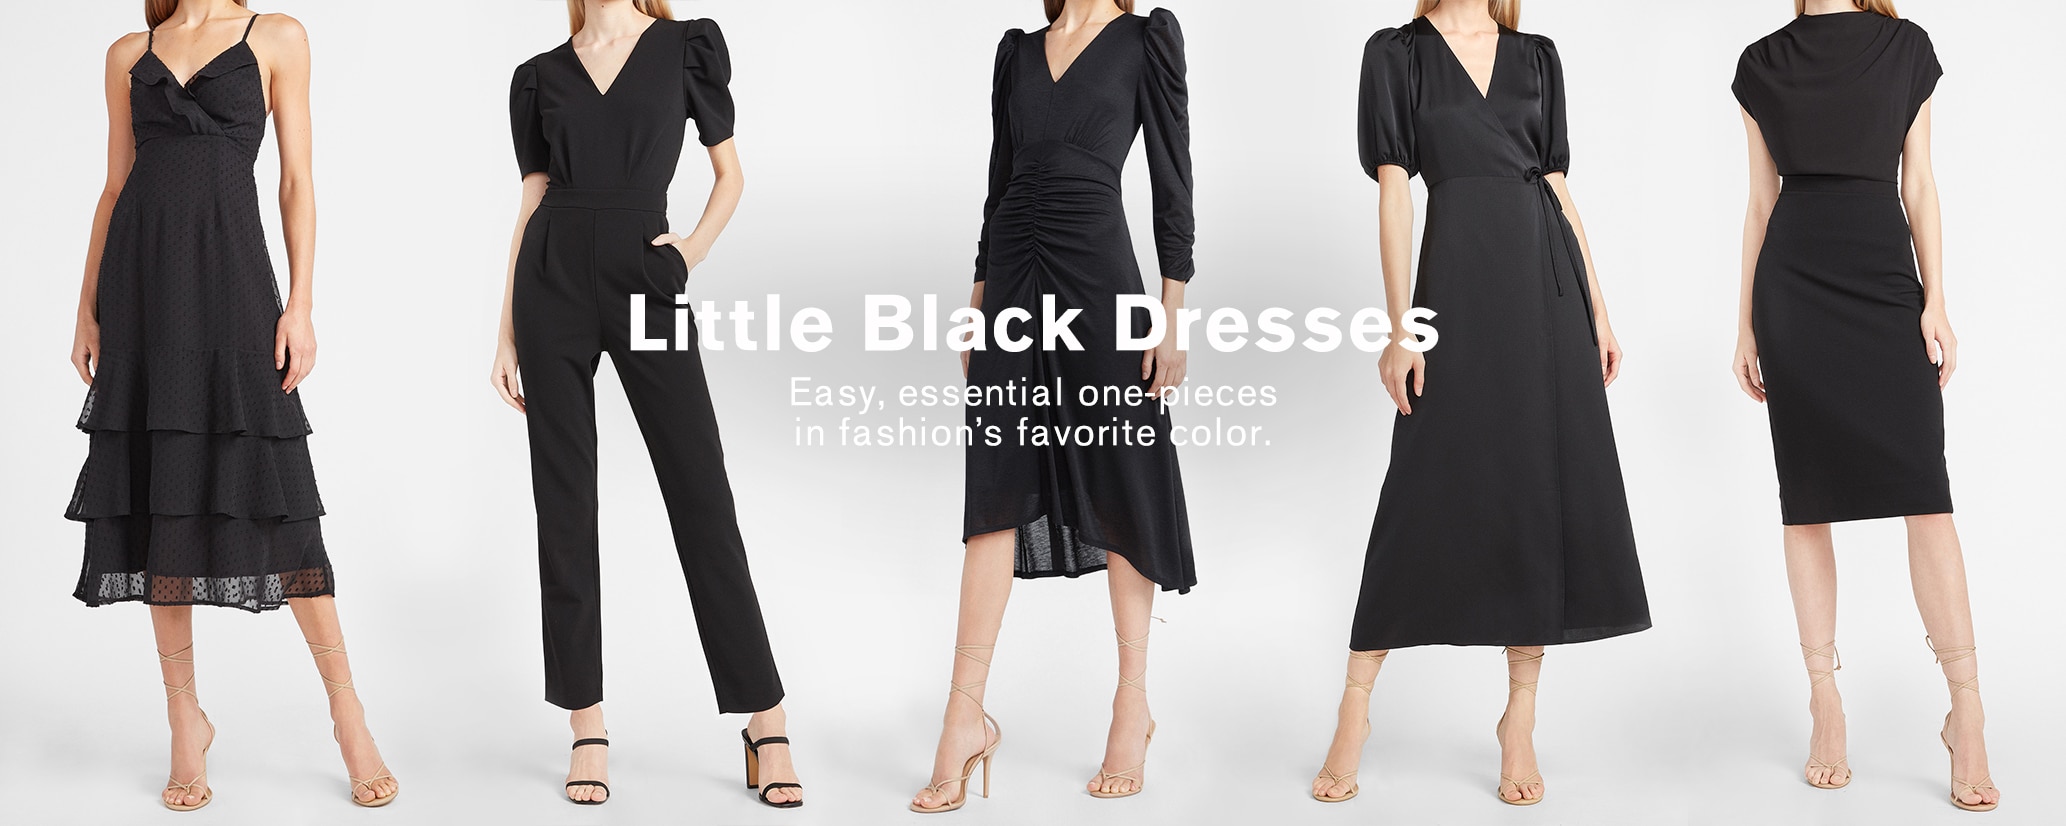 simple black dress for work